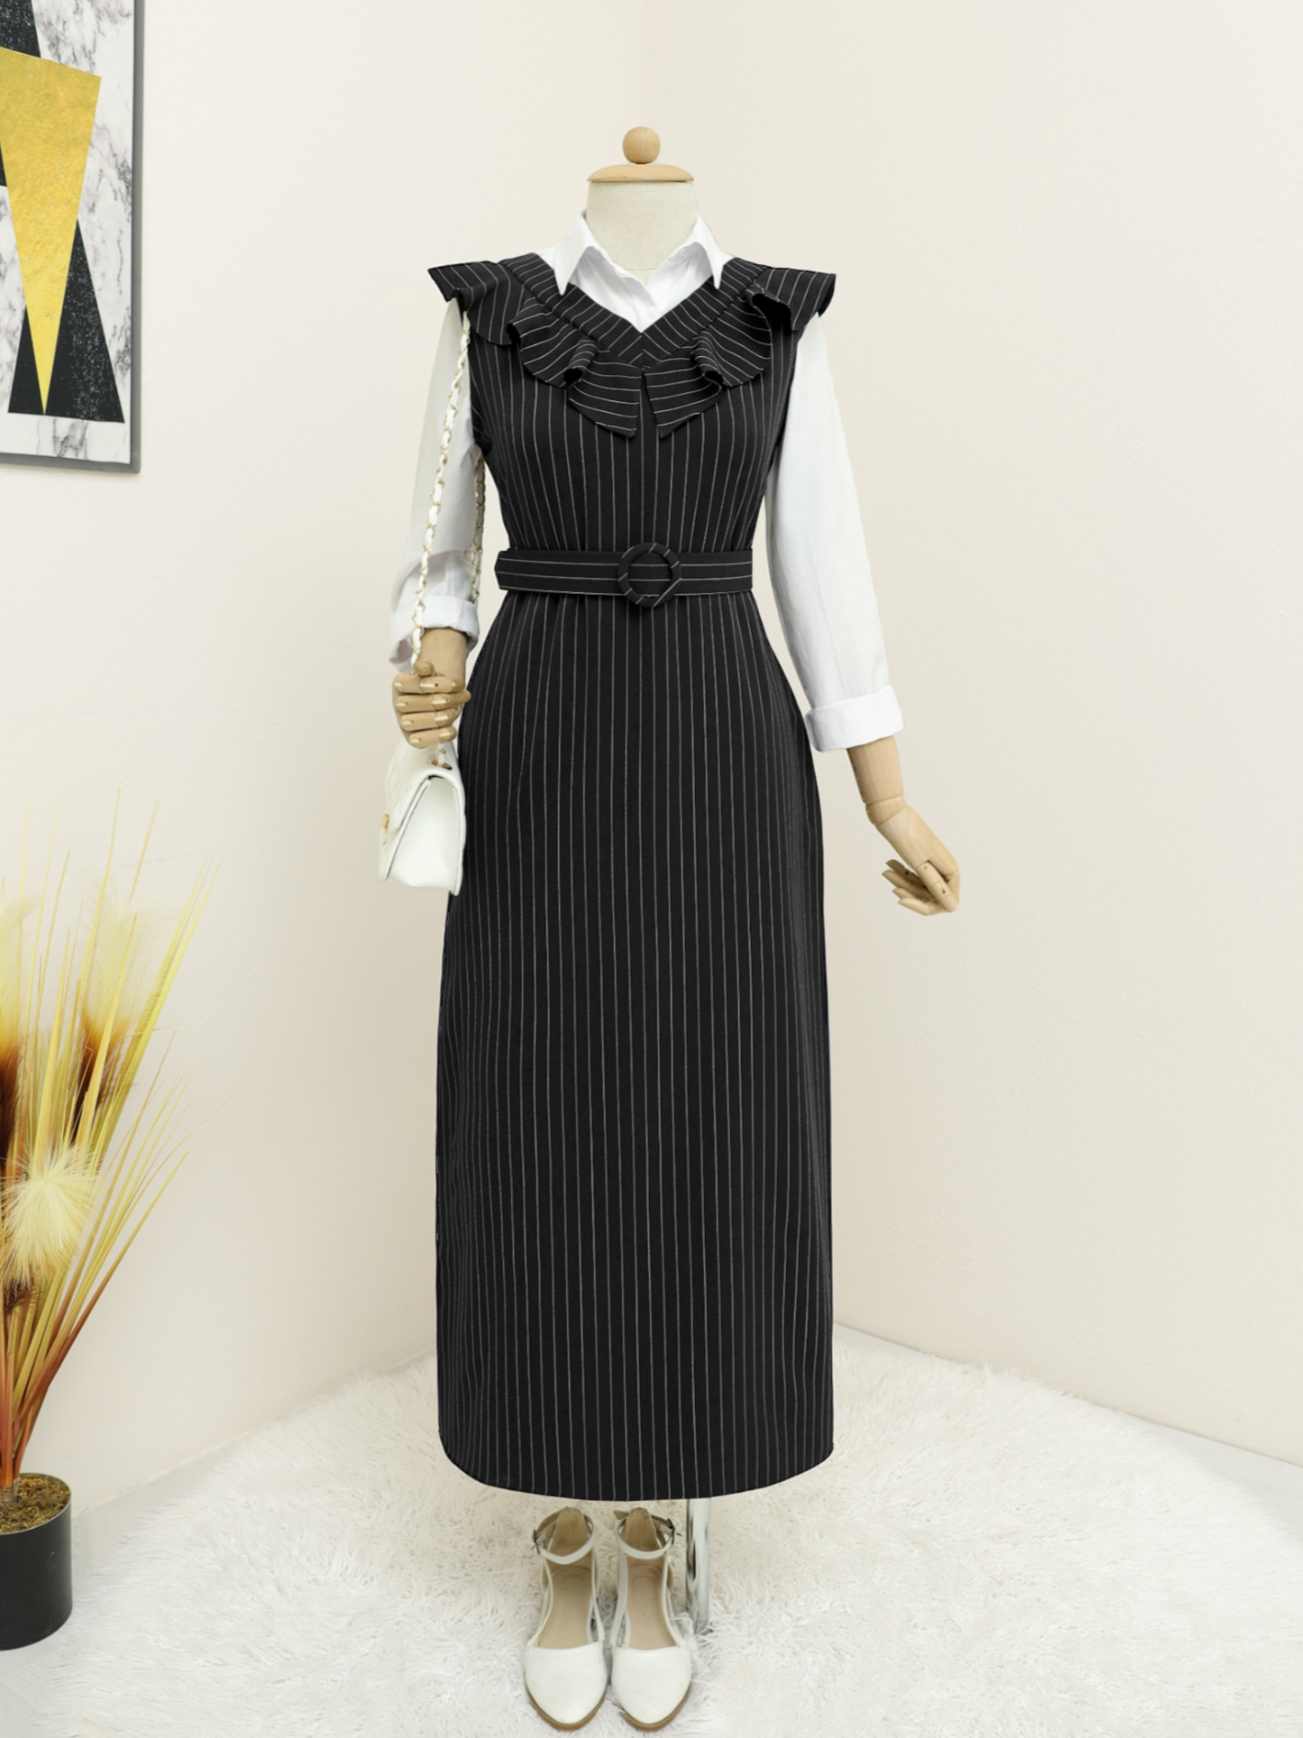 Yakası Frilly Striped Arched Gilet Dress -Black